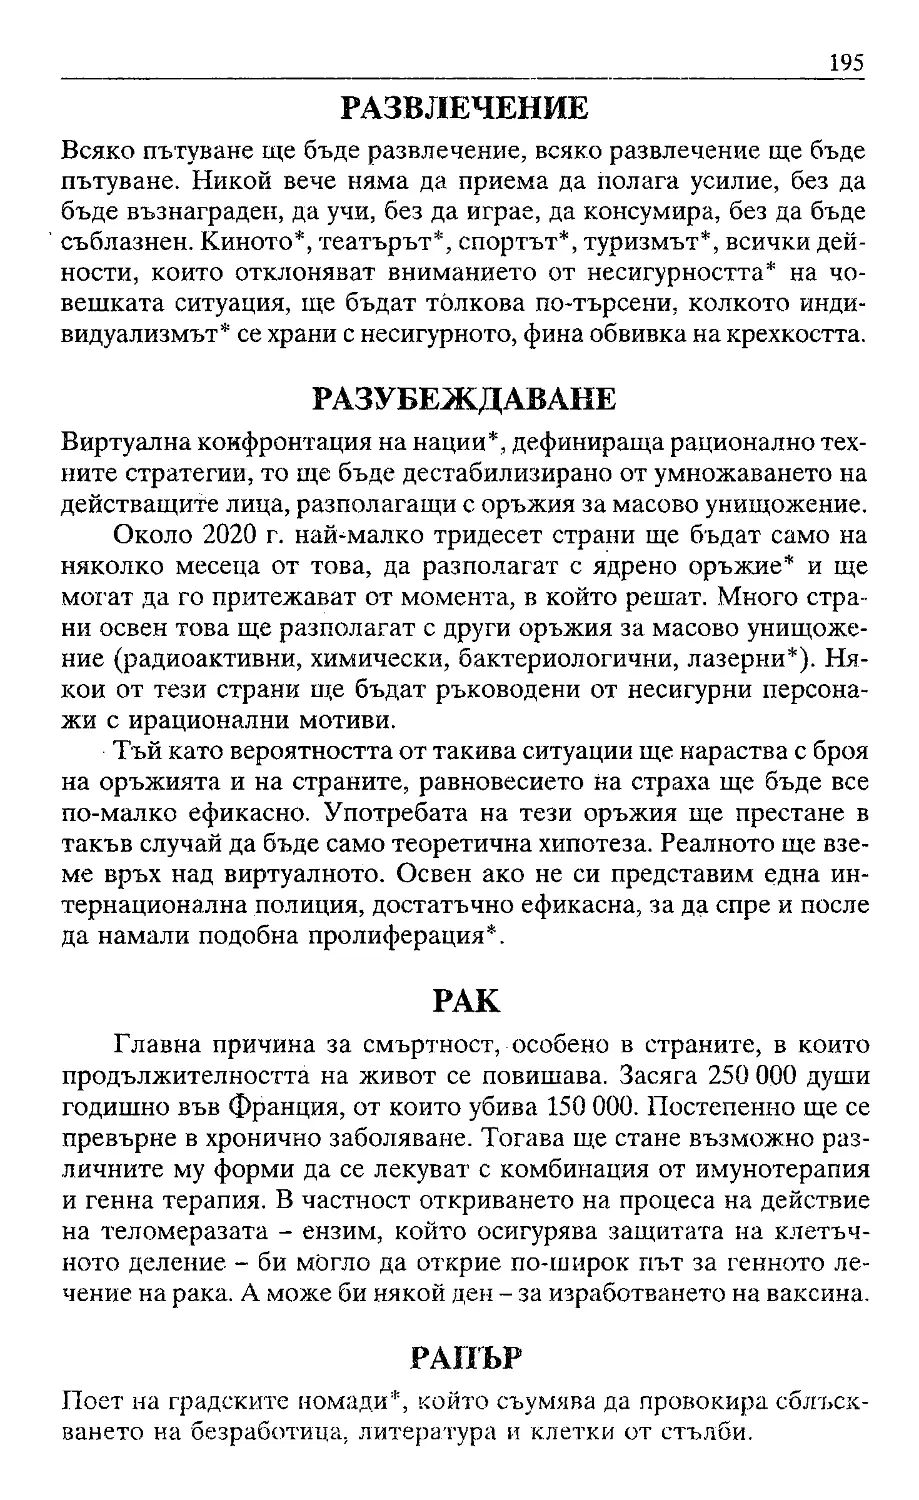 ﻿Жак Атали. Речник на 21 век_Page_096_Image_0001_2